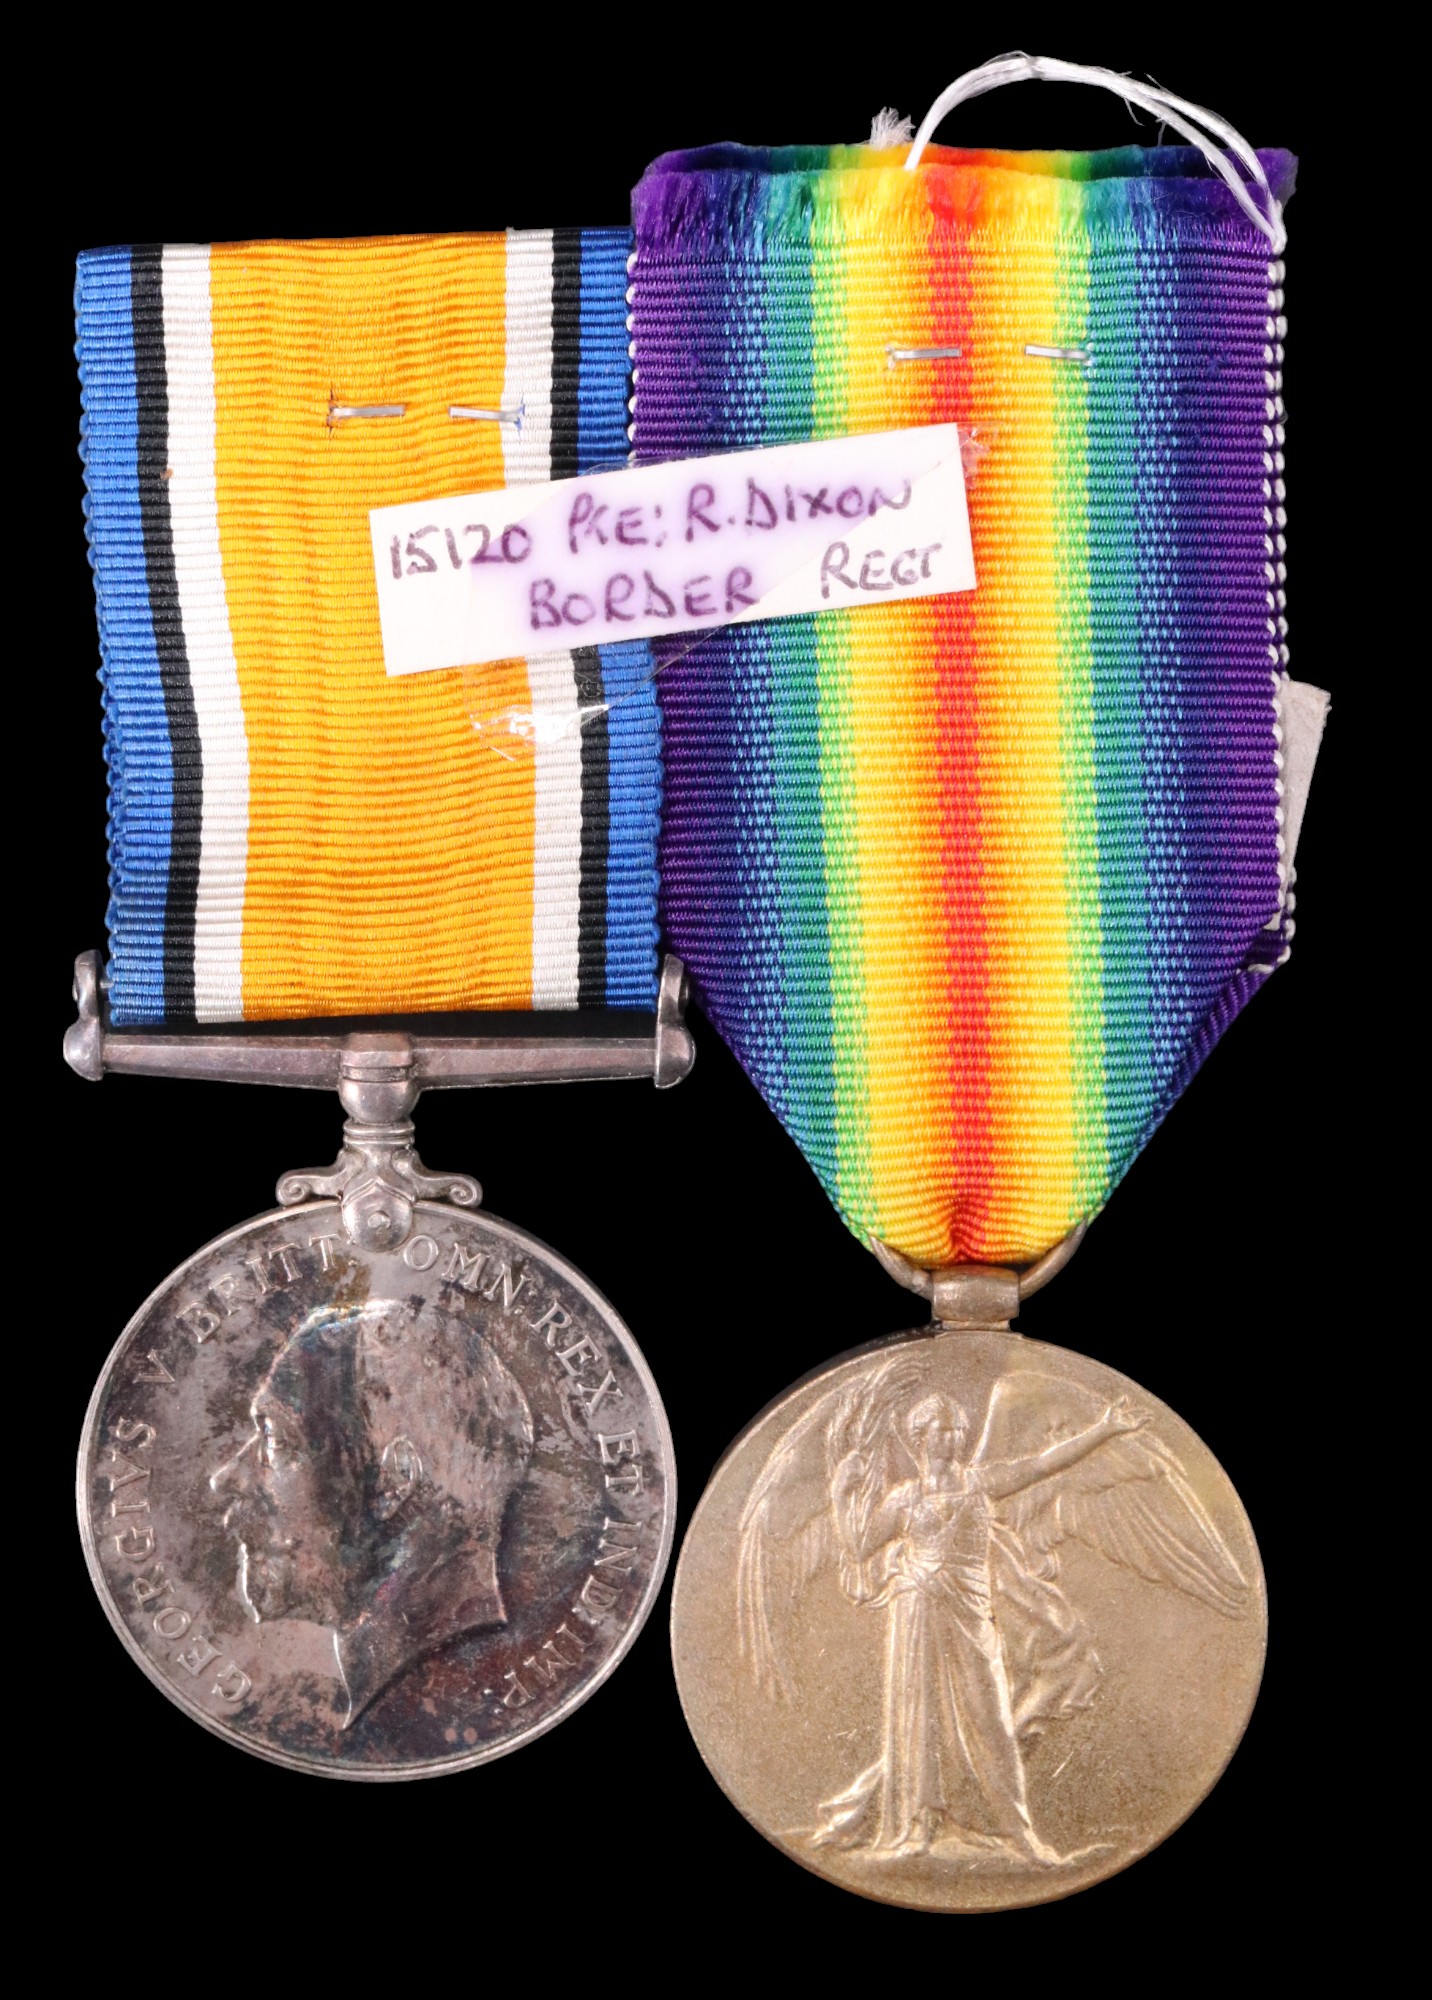 British War and Victory Medals to 15120 Pte R Dixon, Border Regiment